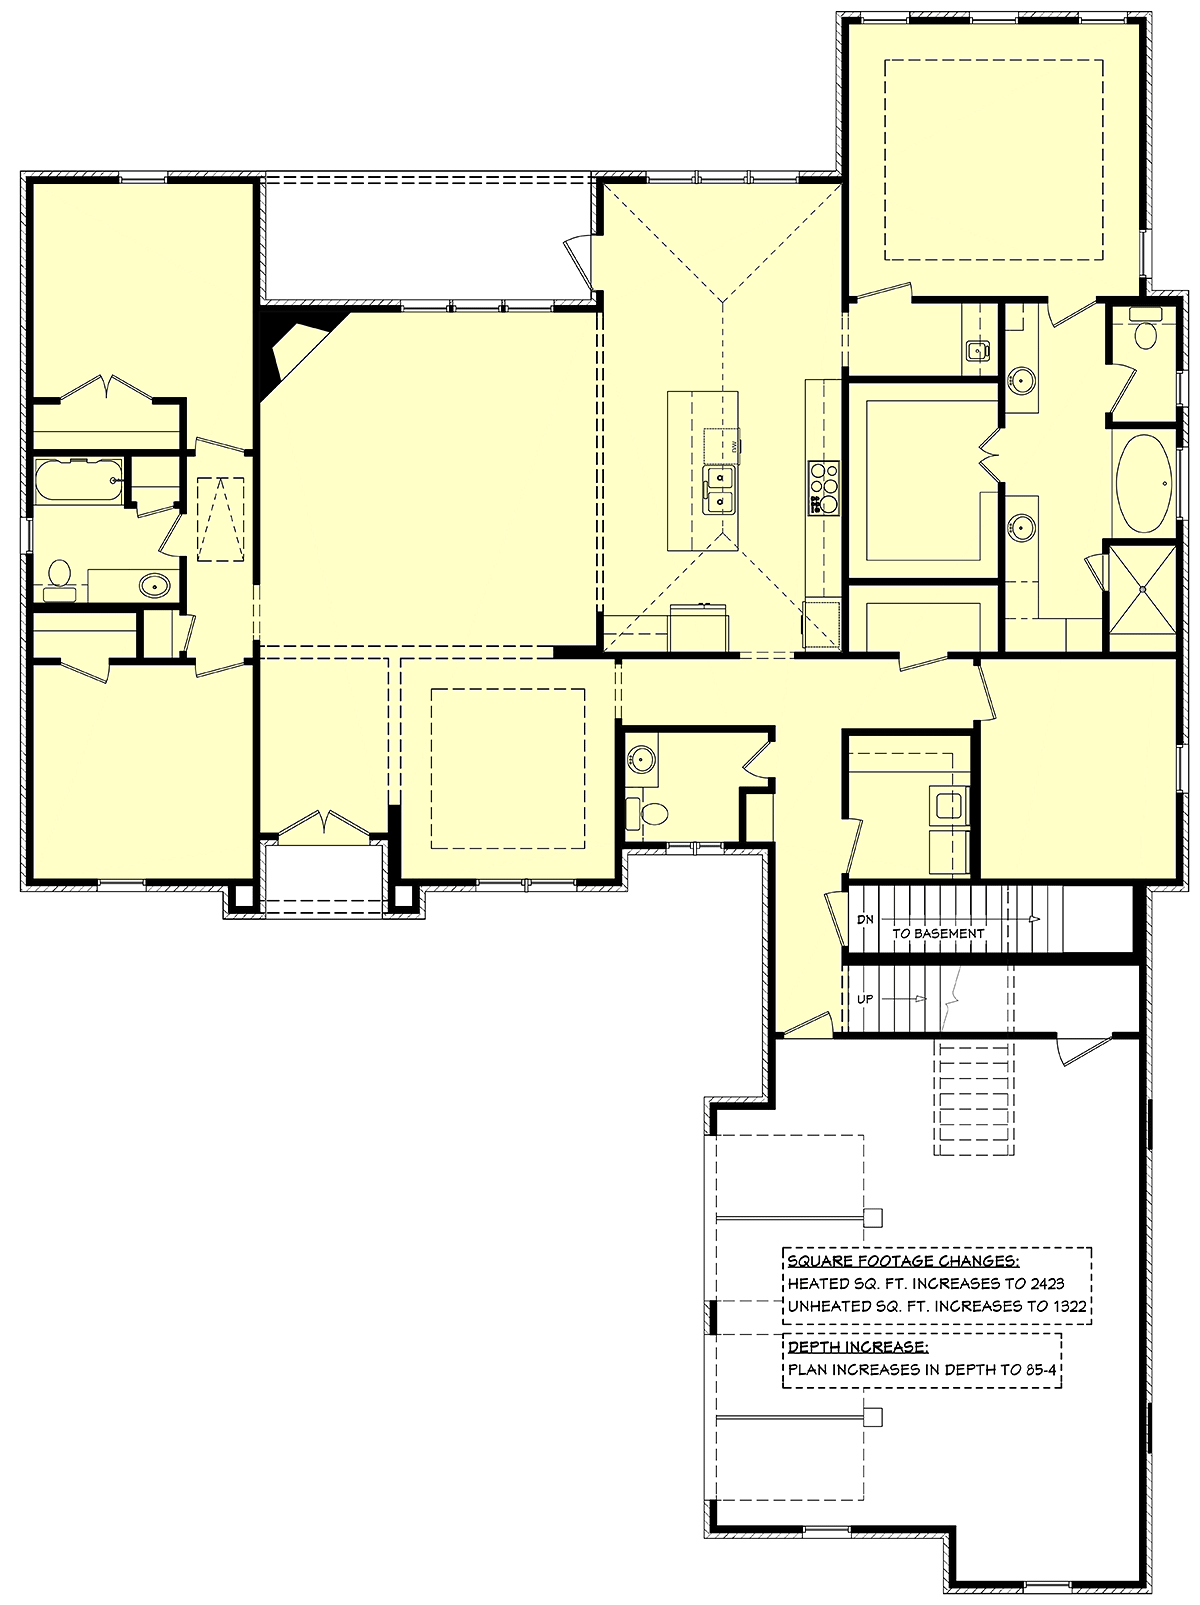 House Plan 51947 Alternate Level One